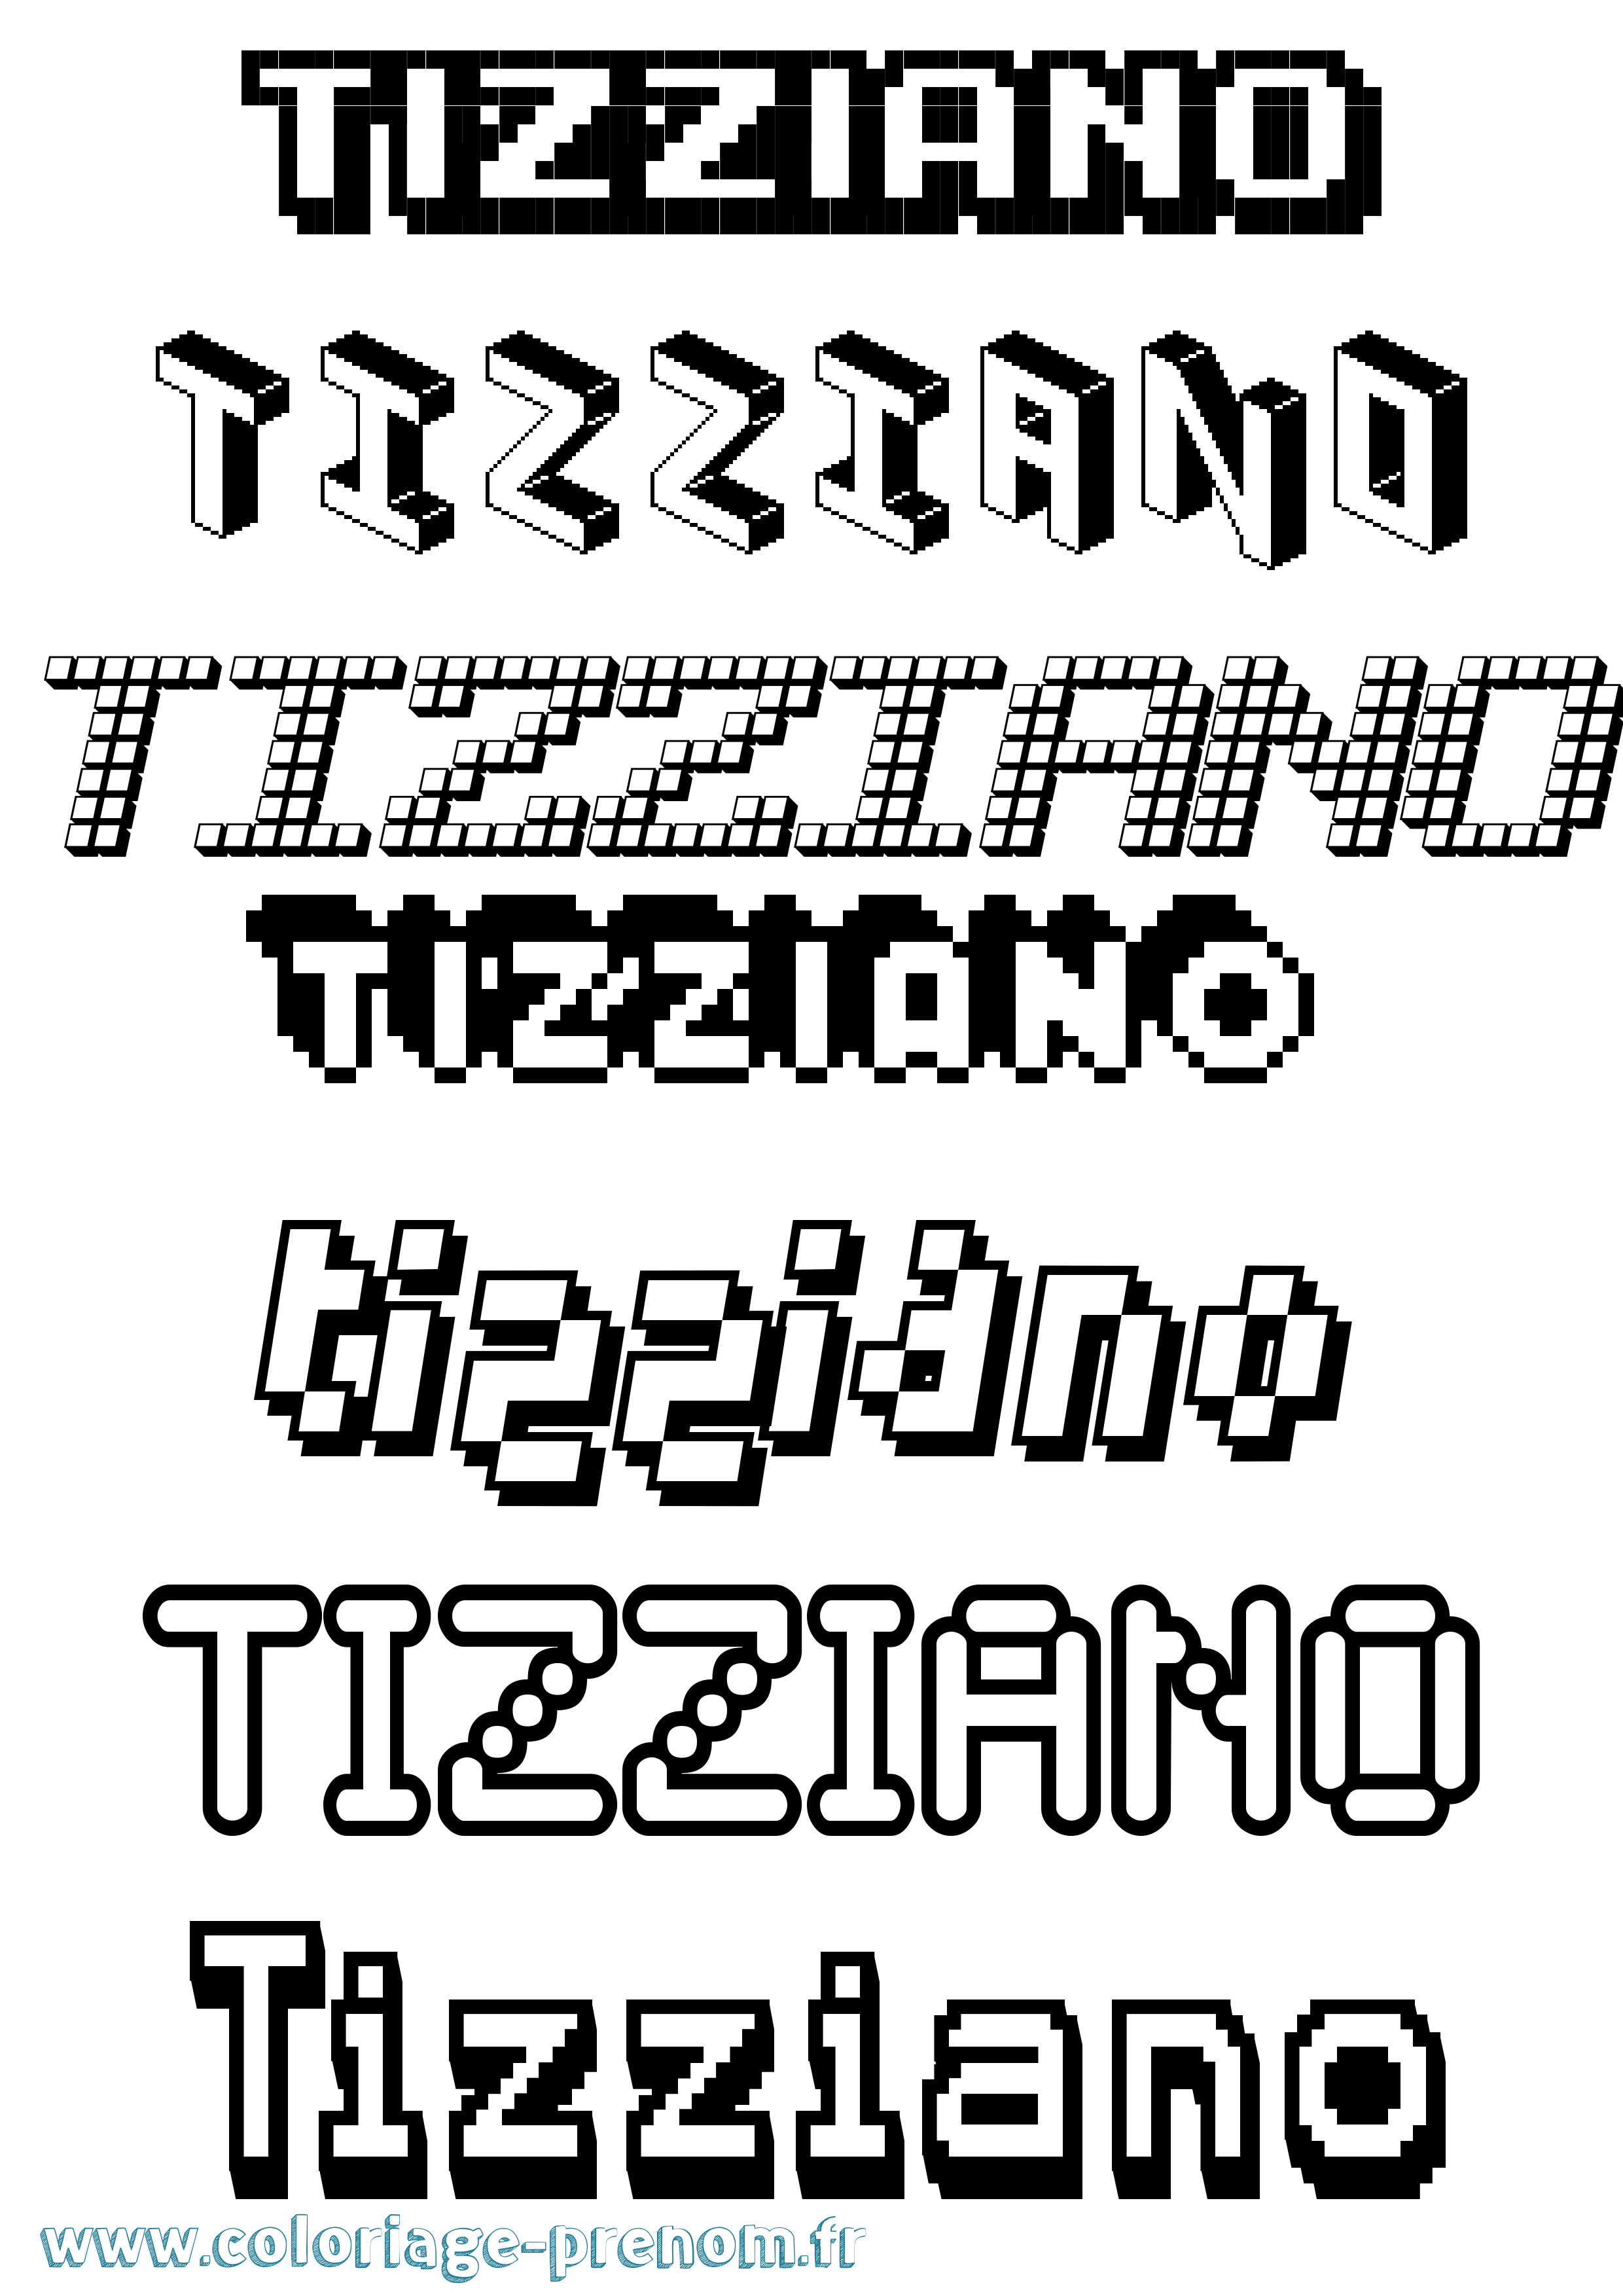 Coloriage prénom Tizziano Pixel